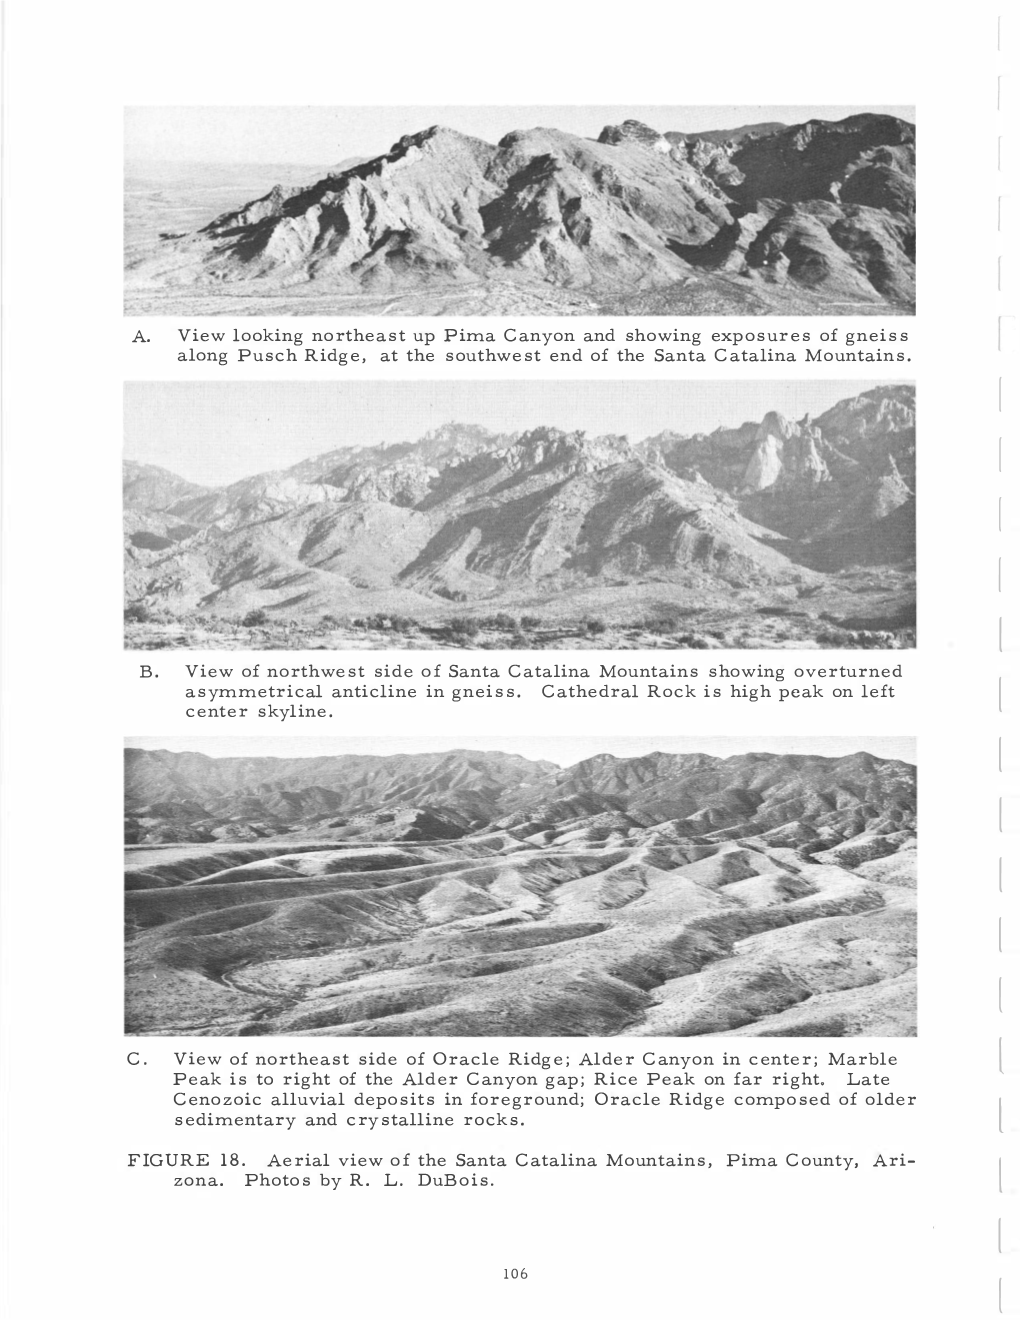 Geology of the Santa Catalina Mountains